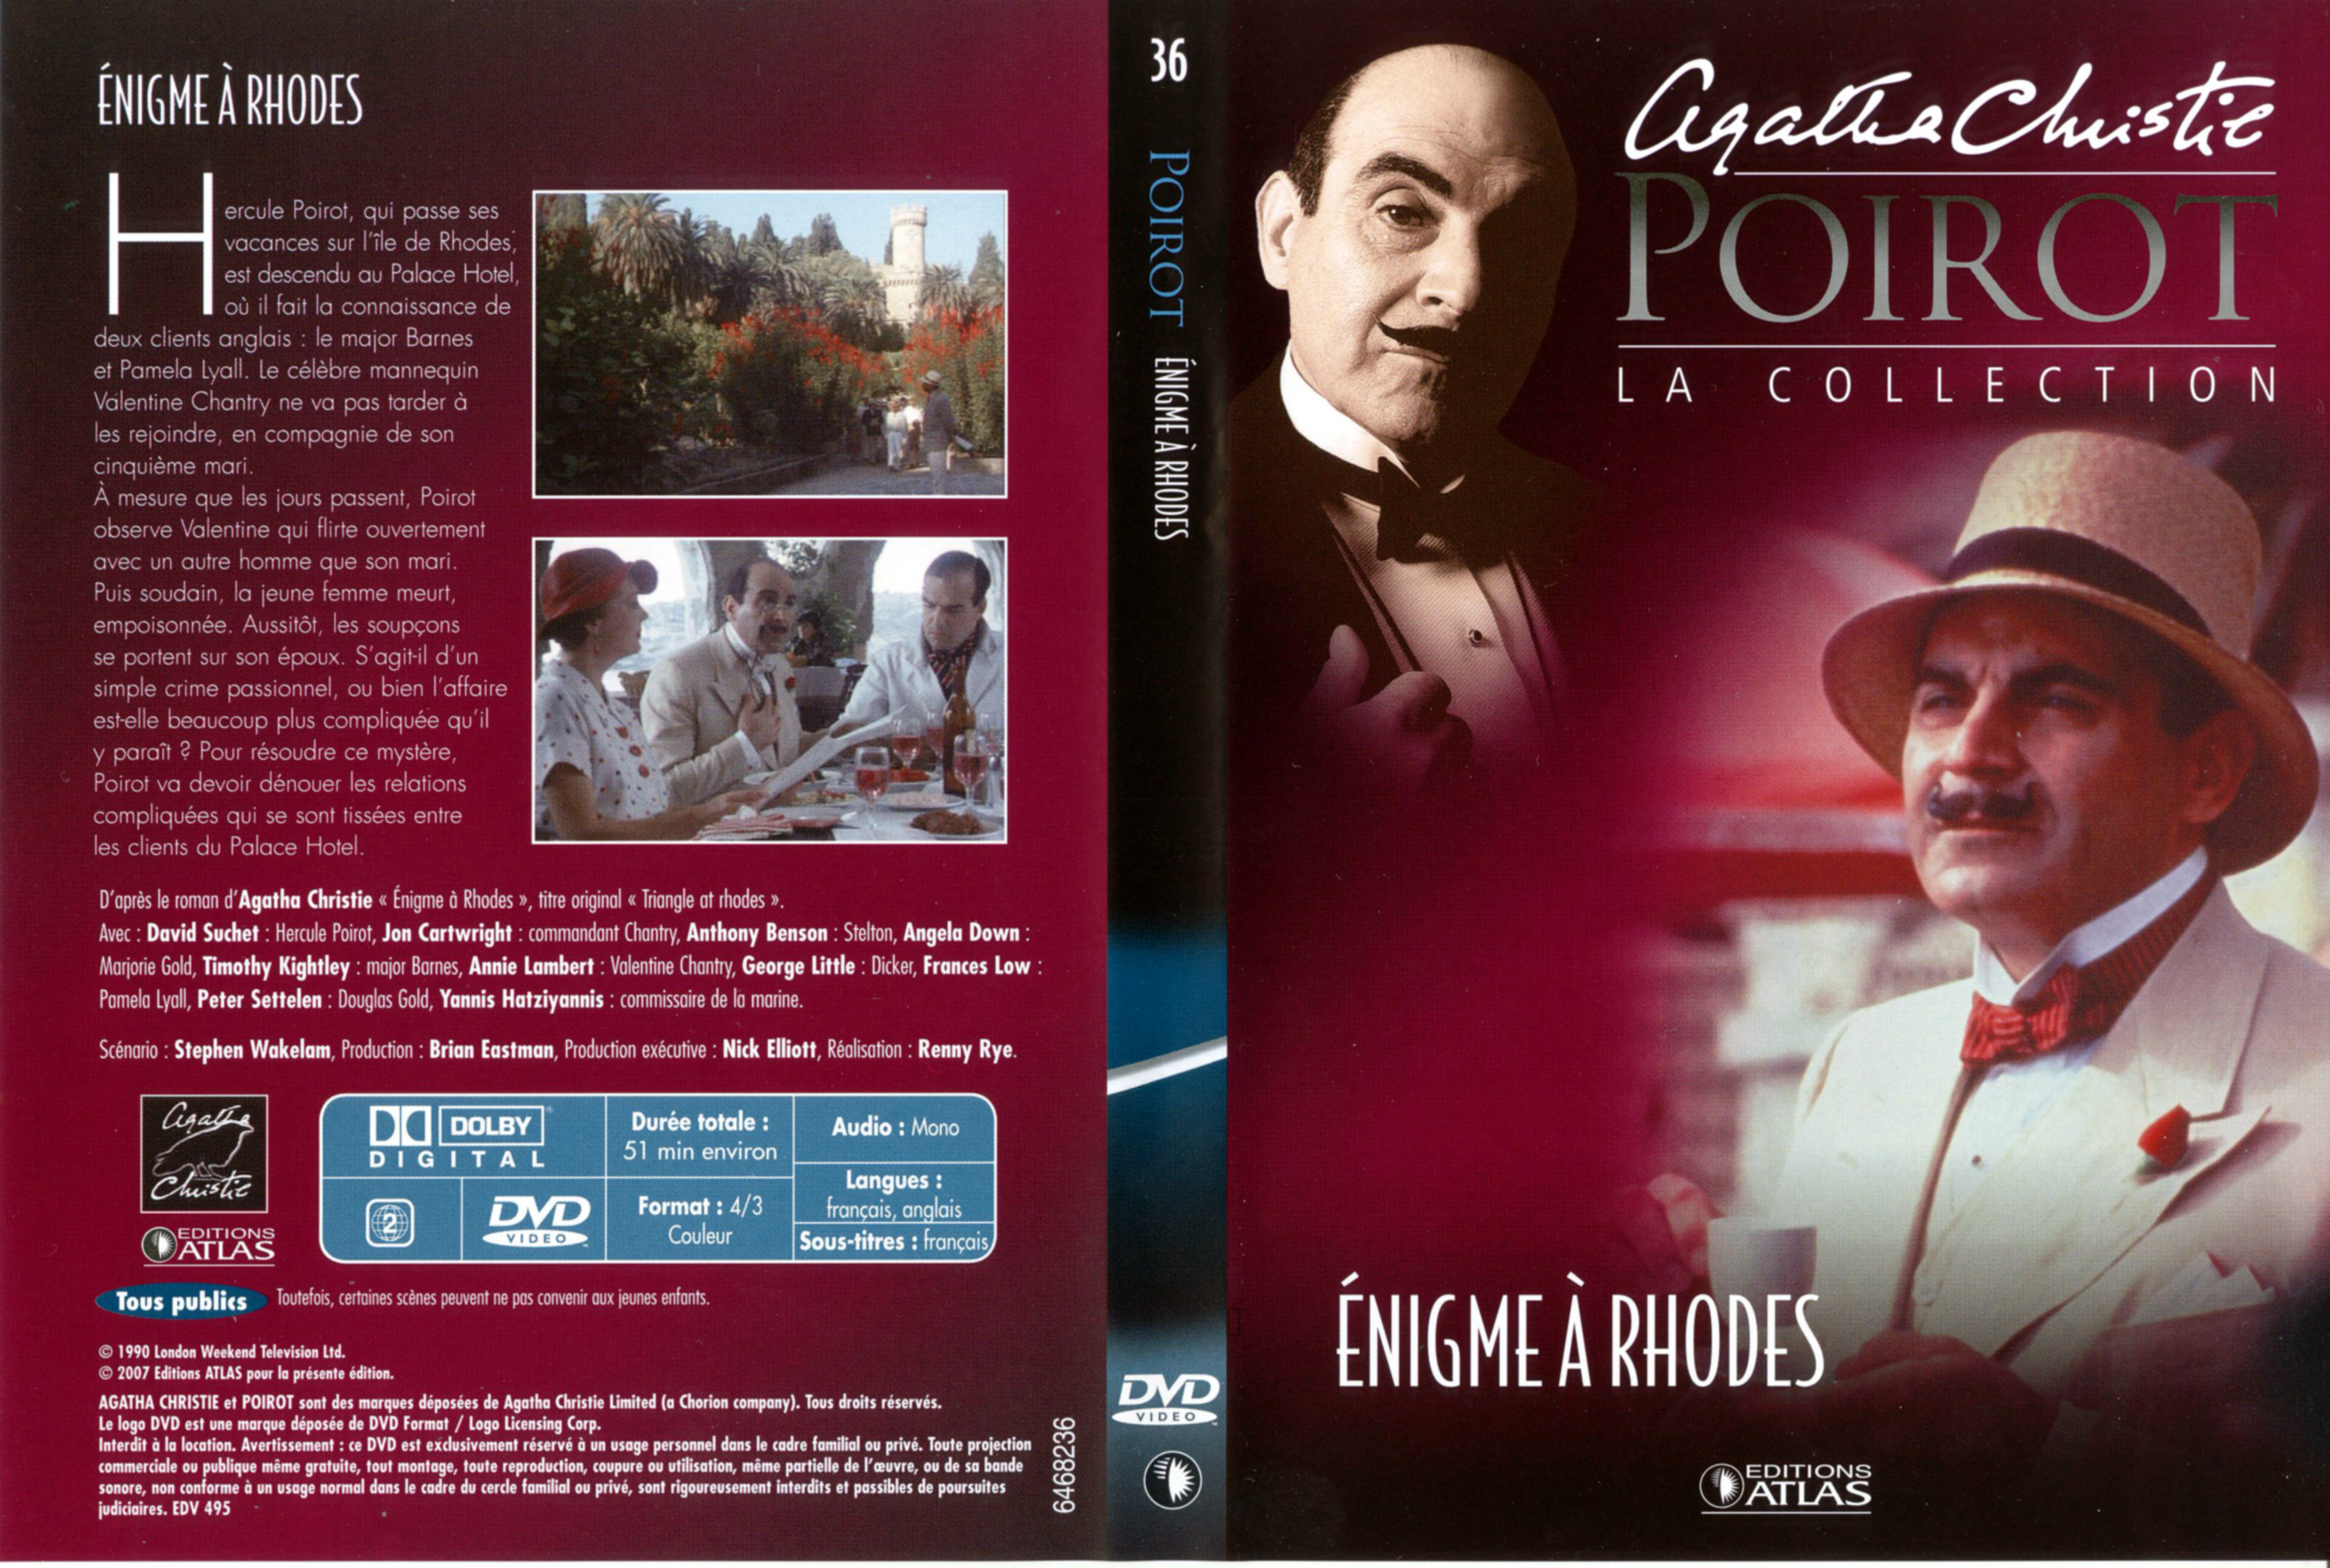 Jaquette DVD Hercule Poirot vol 36